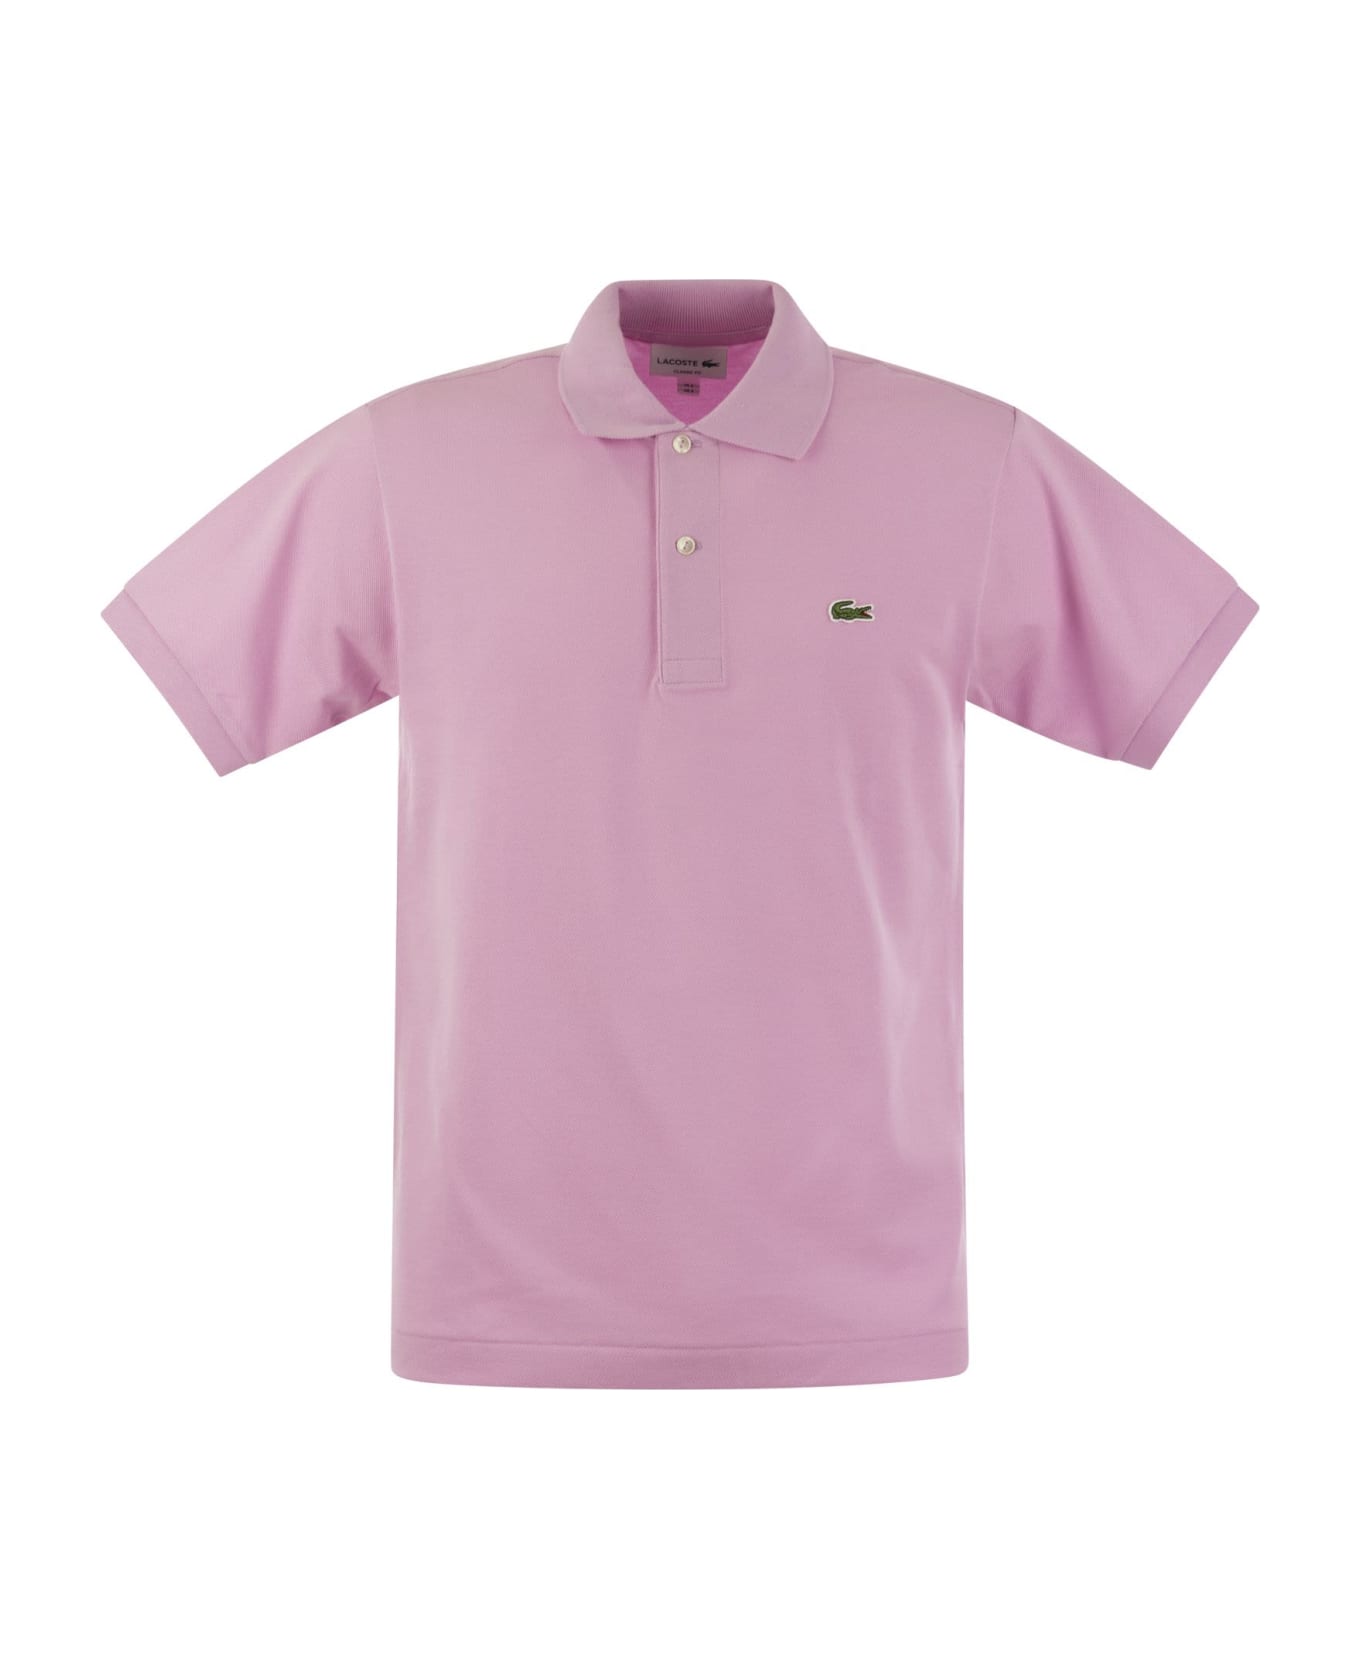 Lacoste Classic Fit Cotton Pique Polo Shirt - Pink